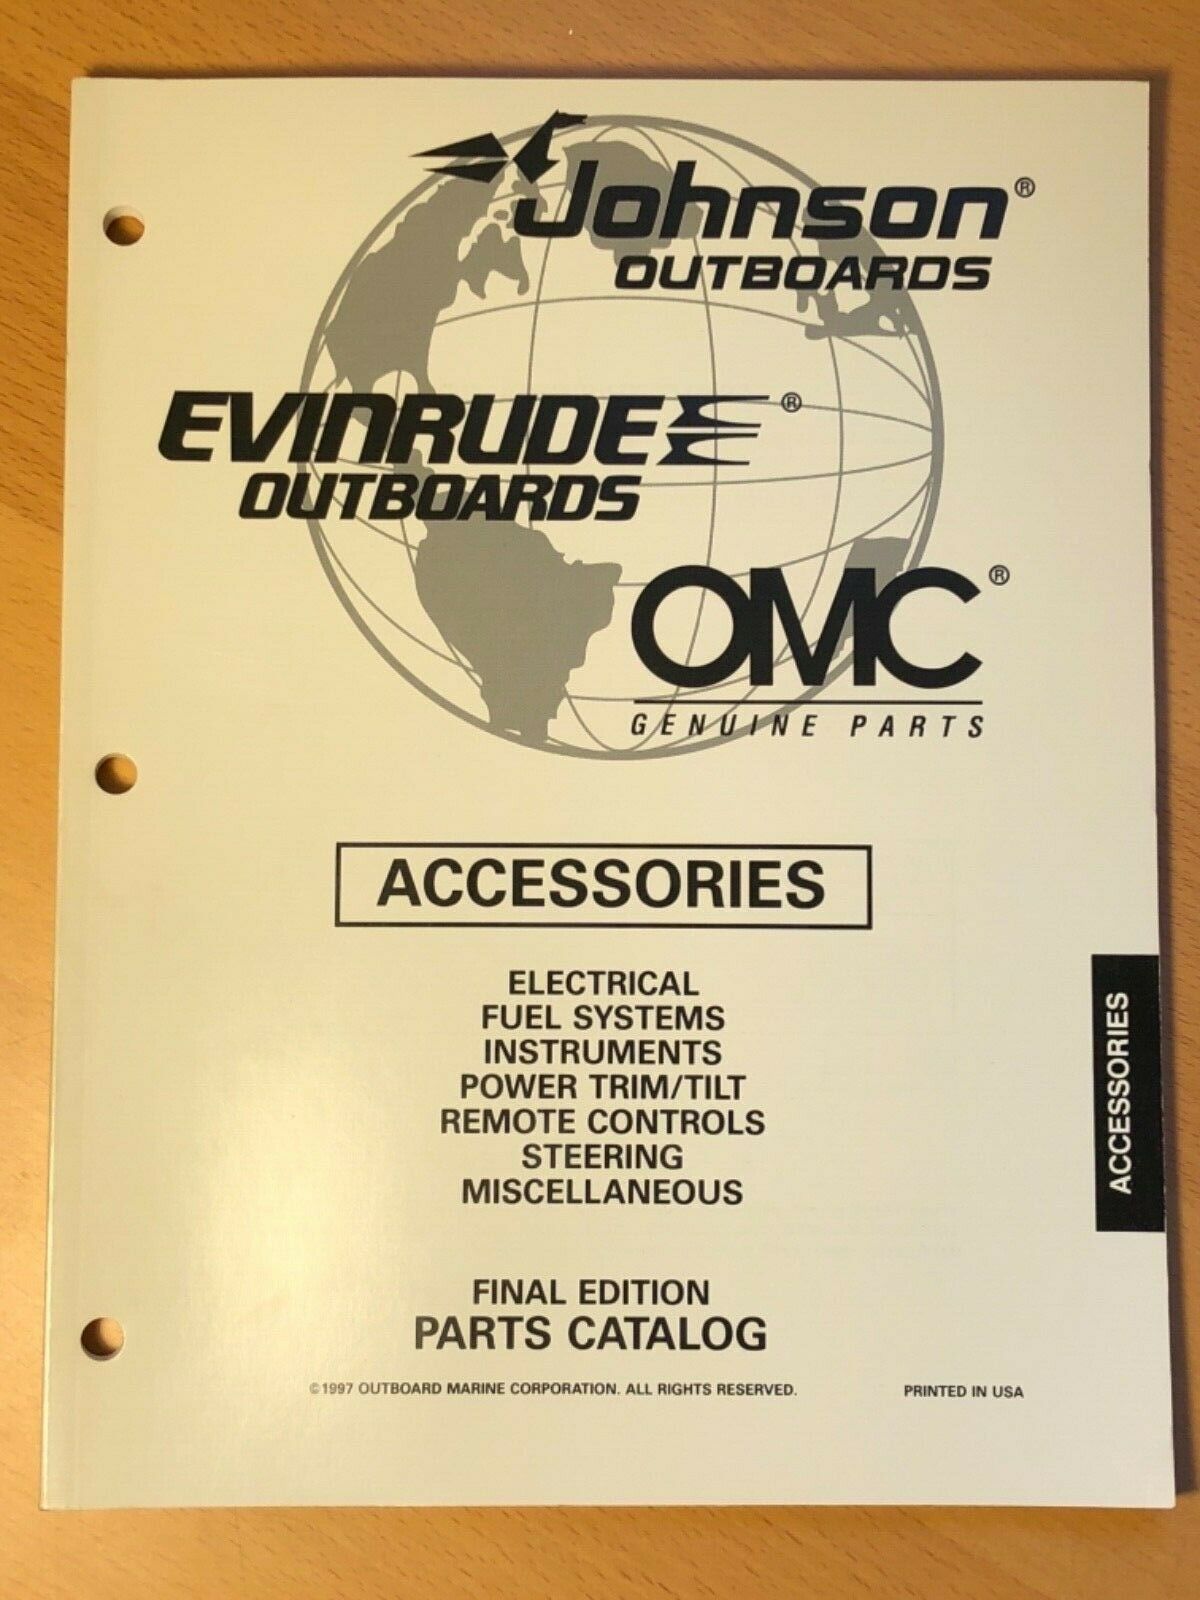 Evinrude Johnson Outboard Motor Accessories Parts Catalog Manual 1997 Omc